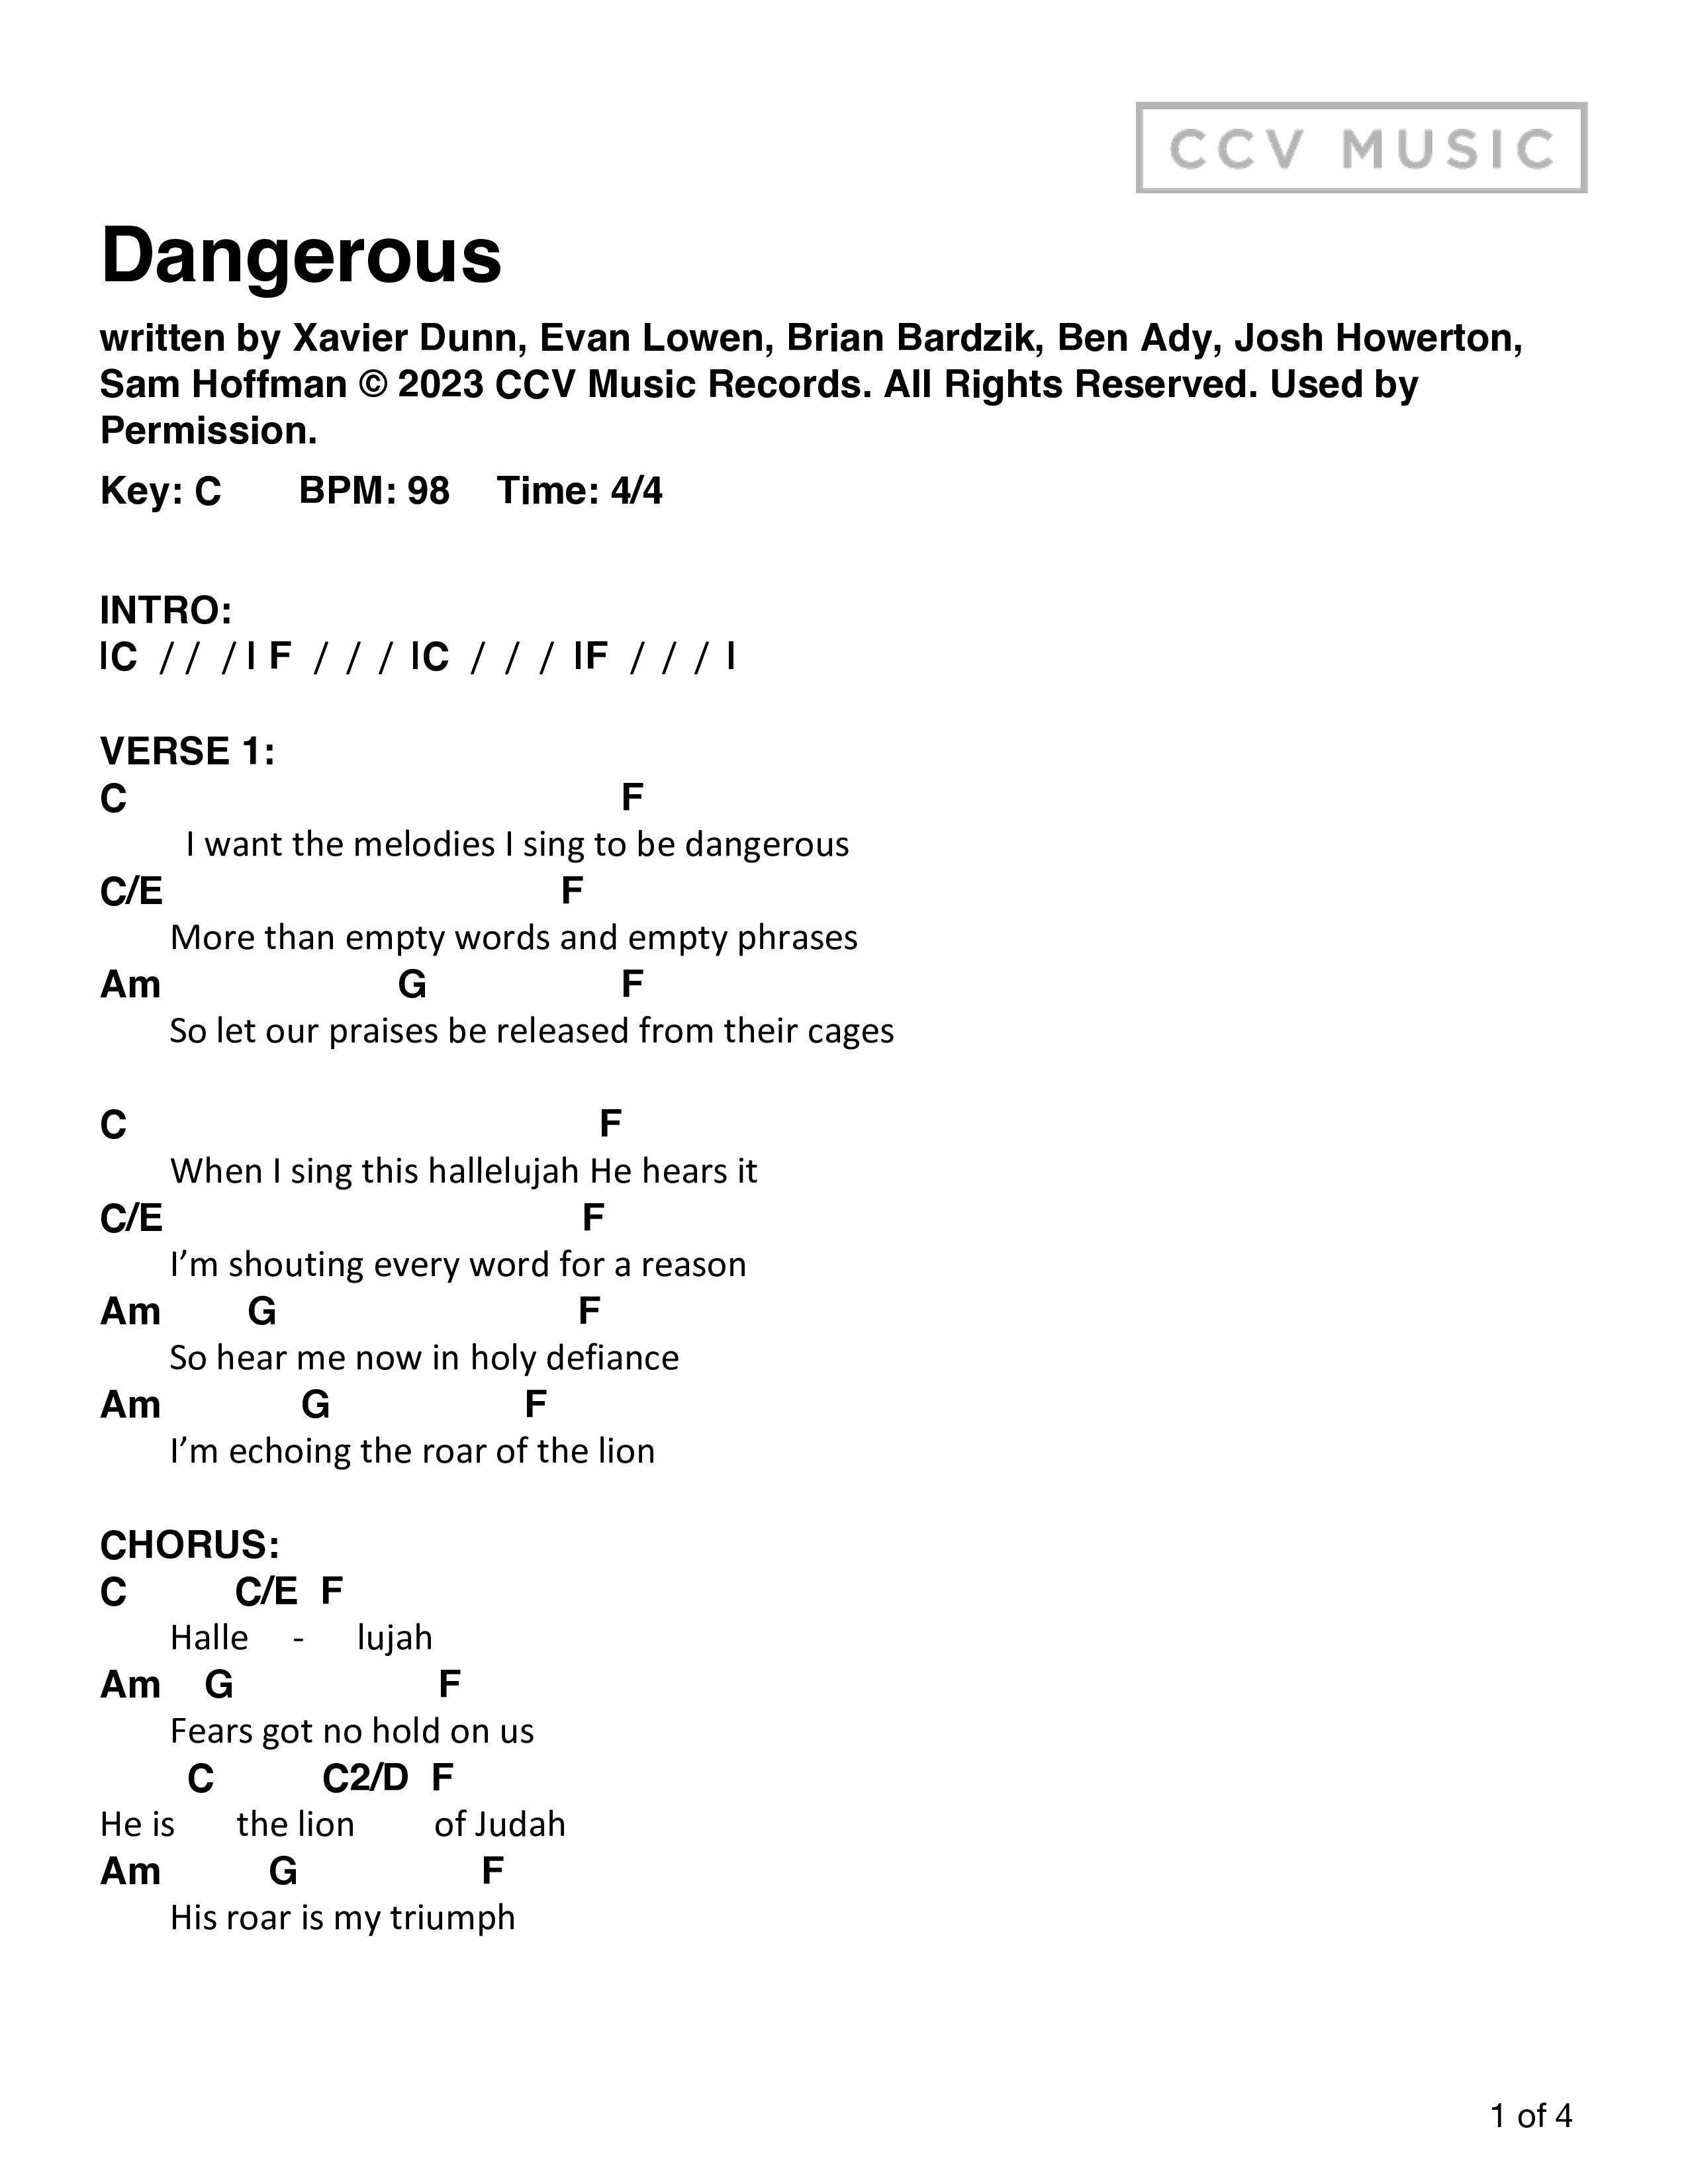 Dangerous (Live) Chord Chart (CCV Music)